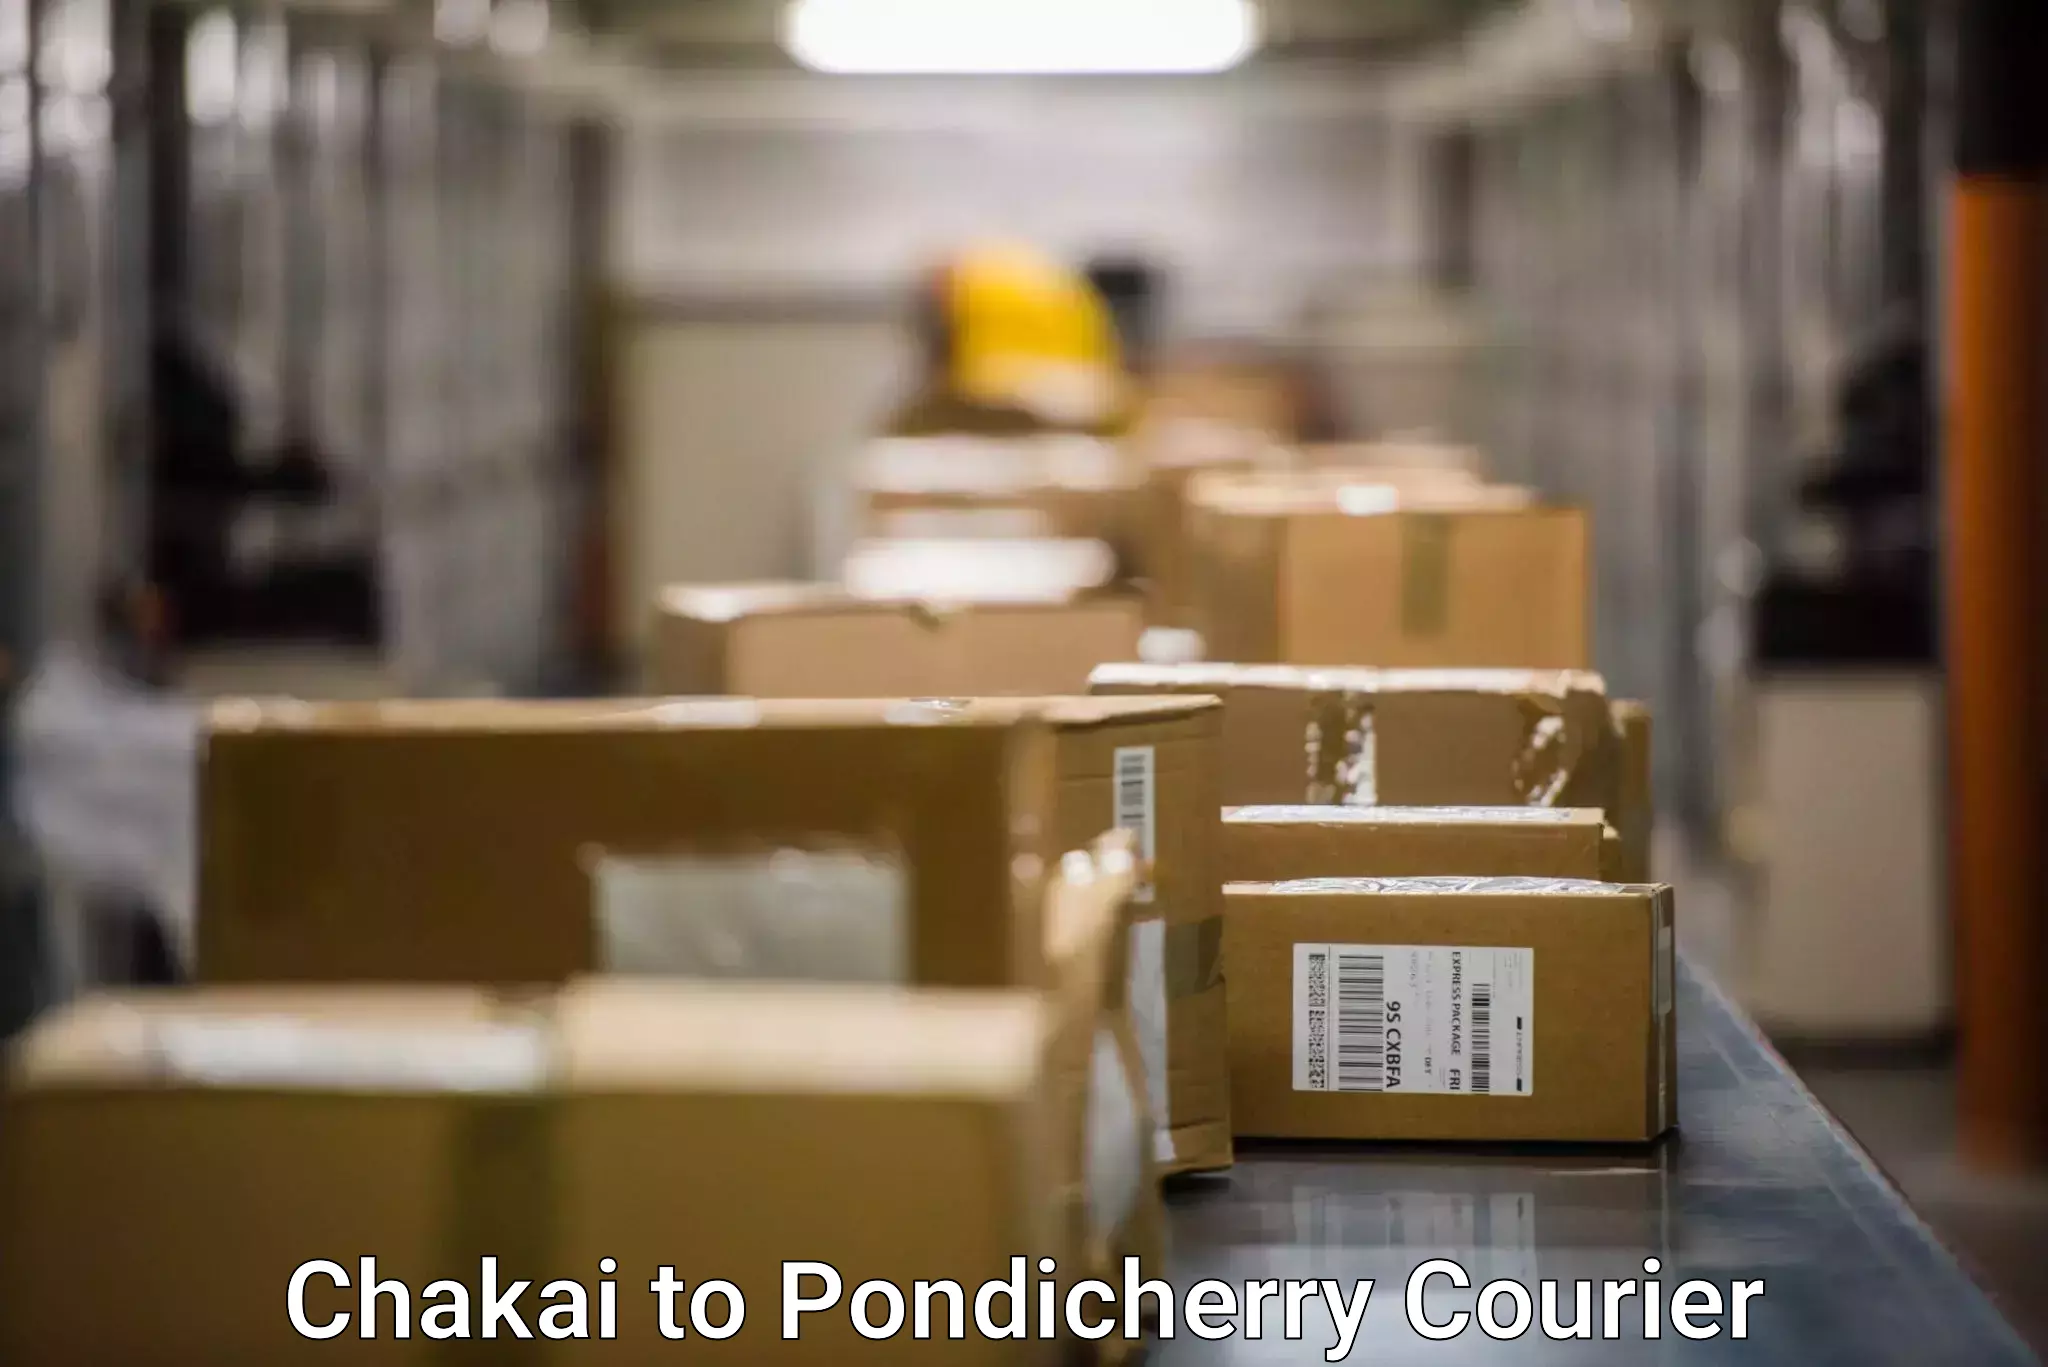 Courier service efficiency Chakai to Pondicherry